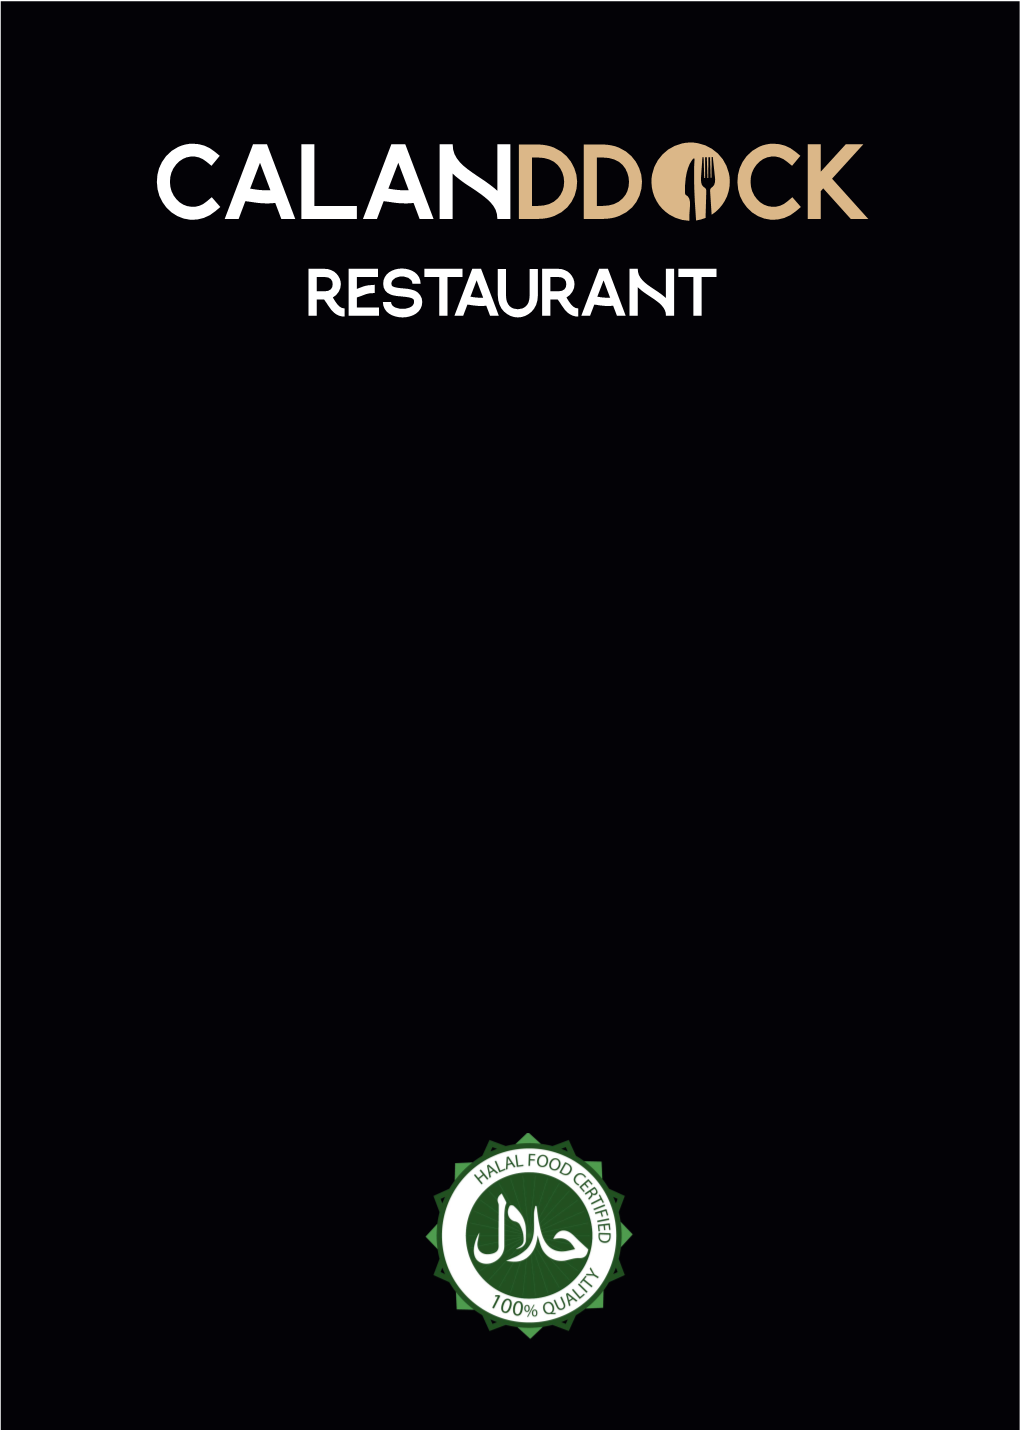 Calanddock Restaurant Menukaart 2021